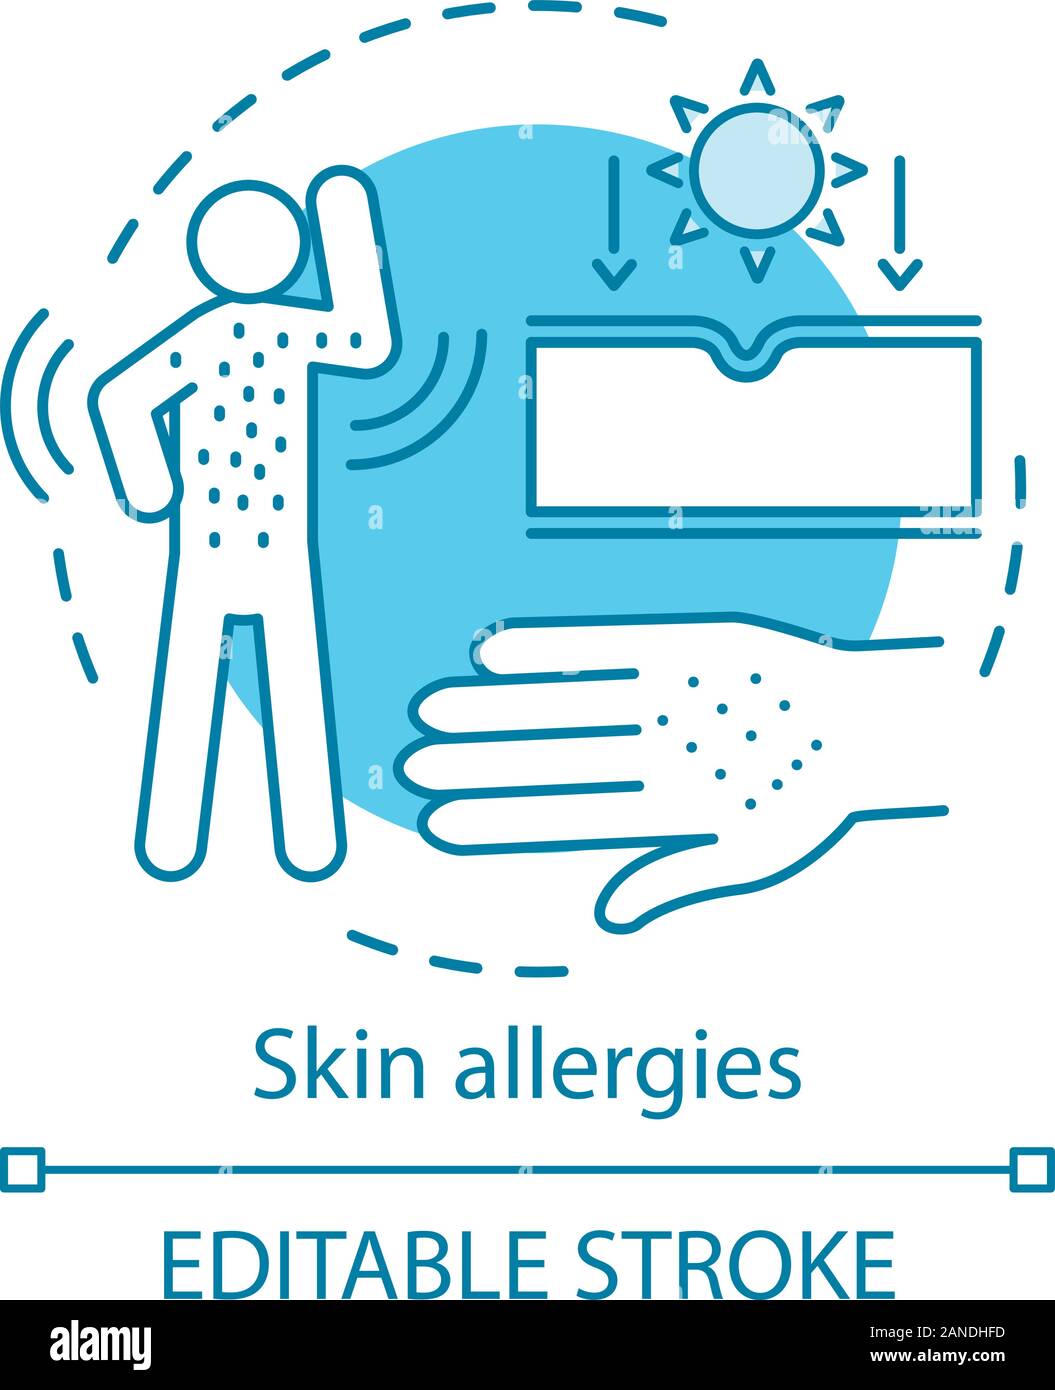 Allergies color icons set. Peanut, milk, dust, mold intolerance